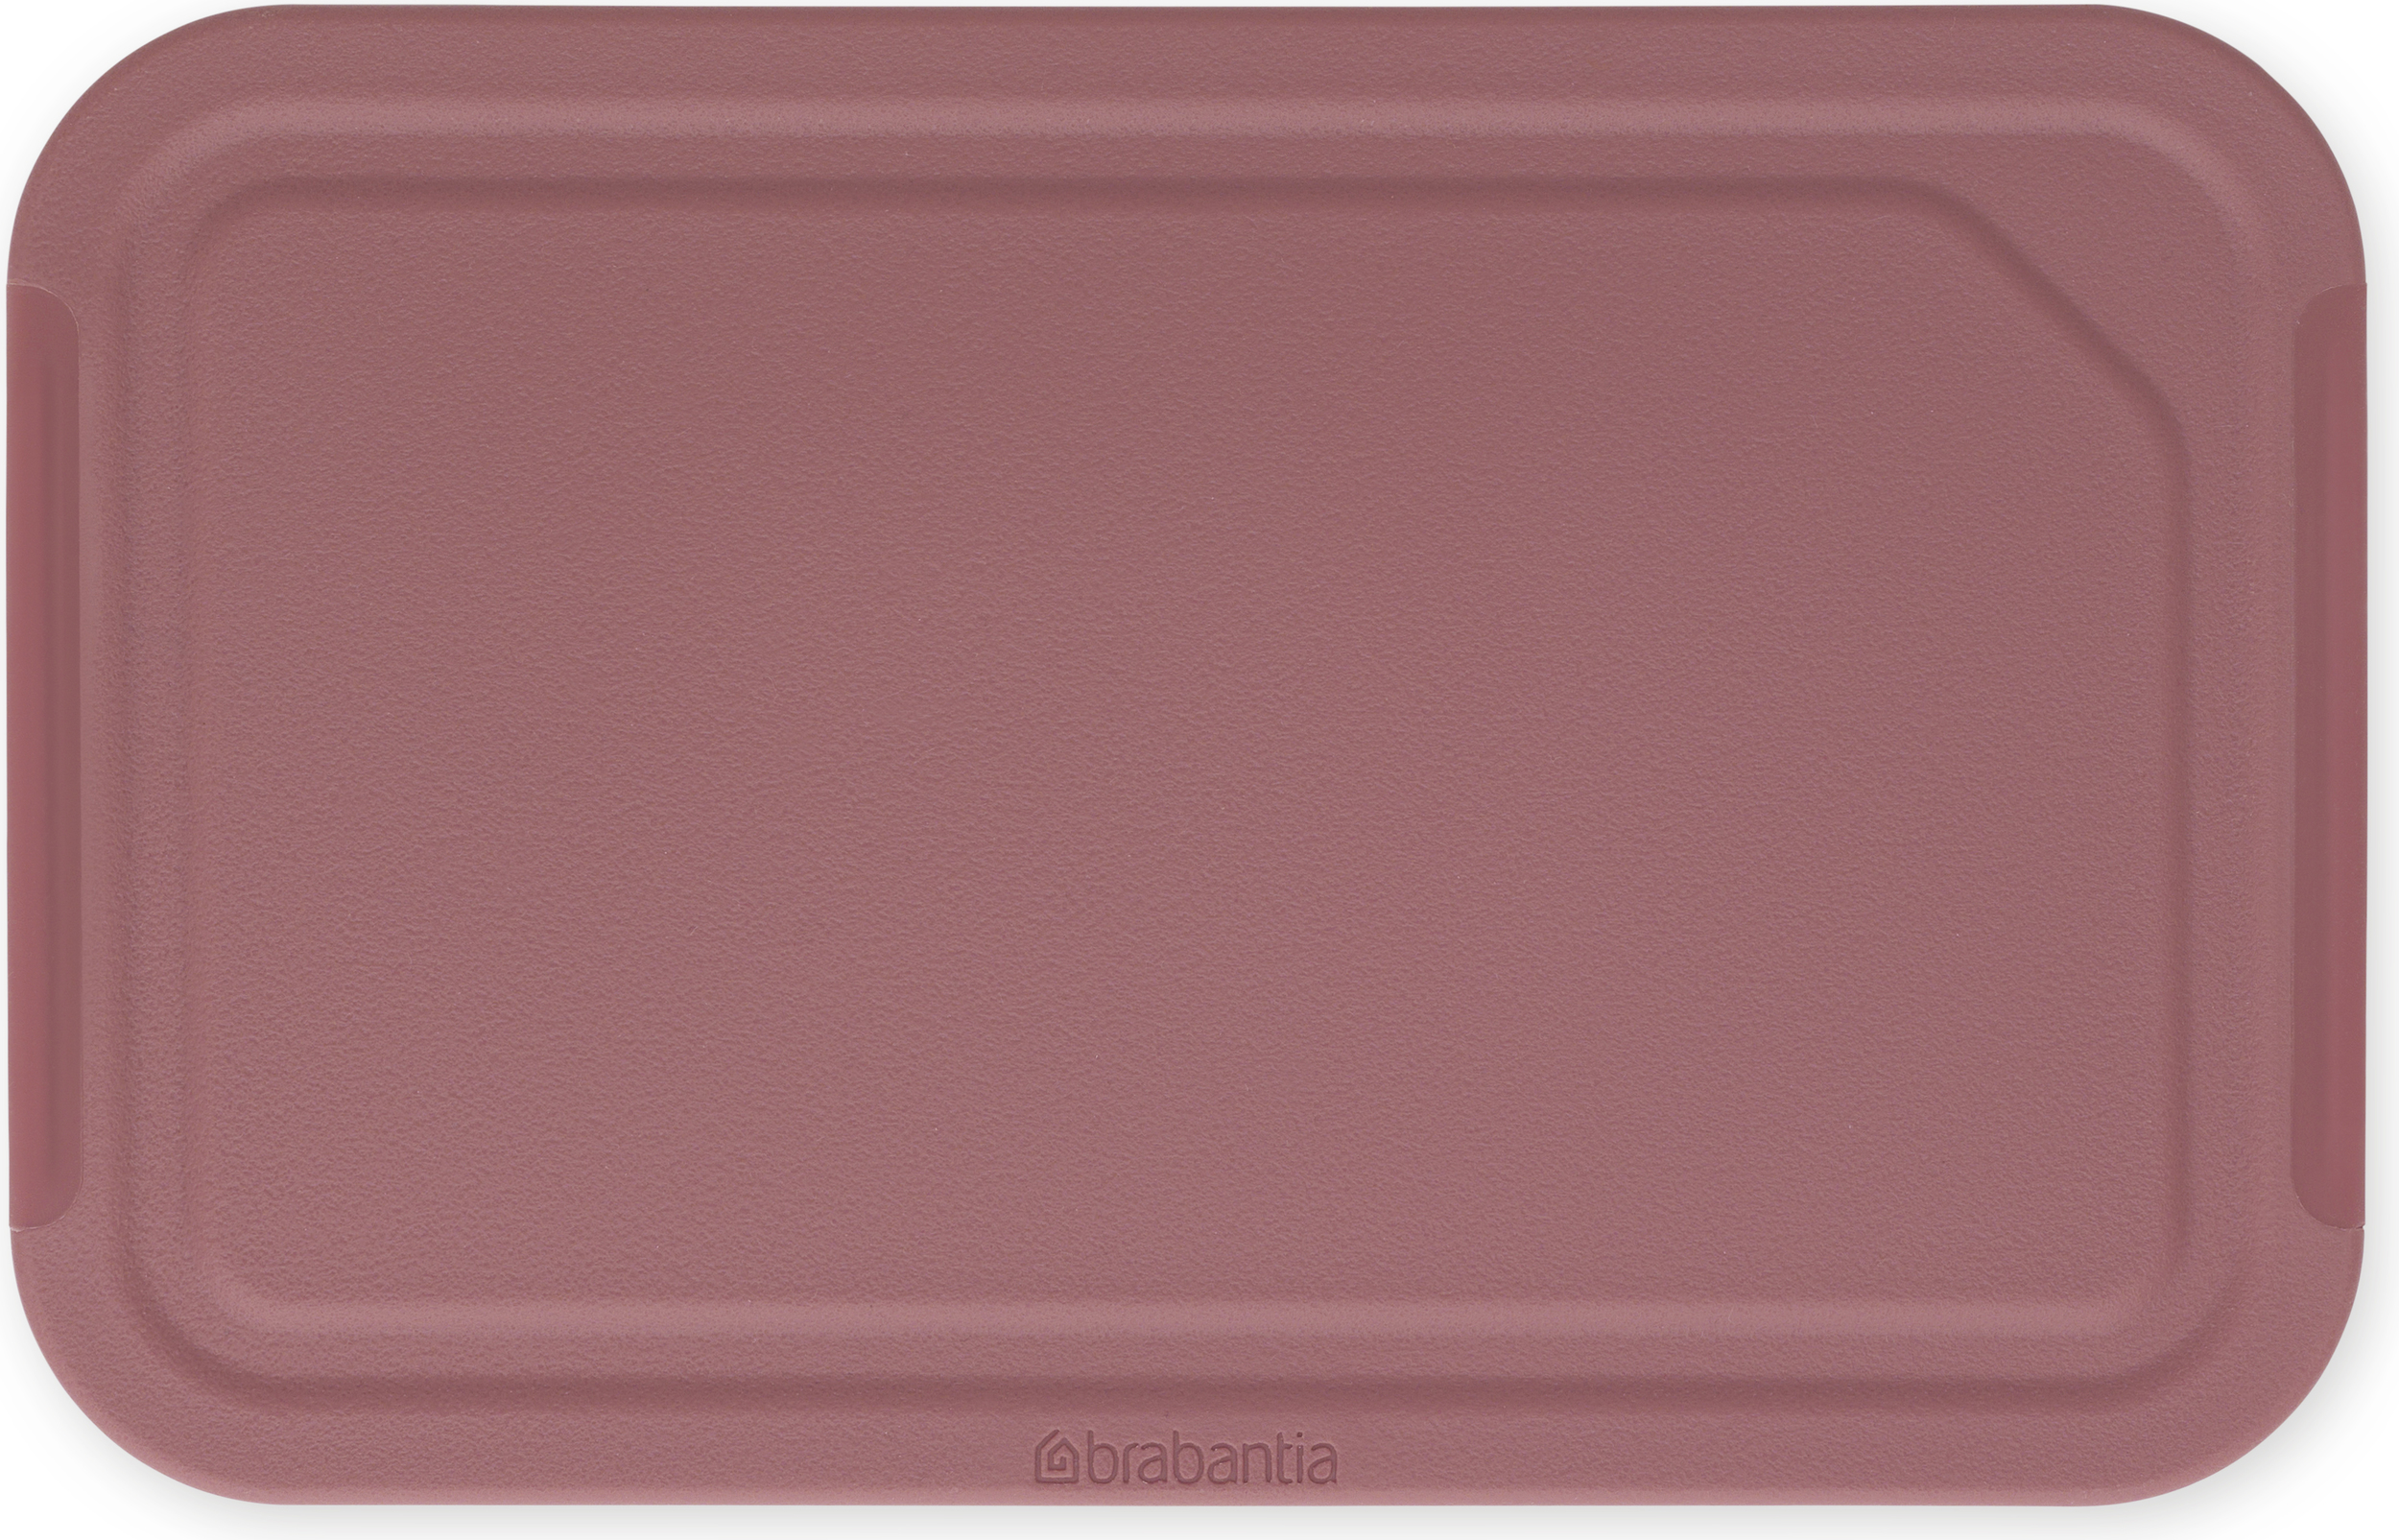 Tasty Colours Cutting board - Brabantia